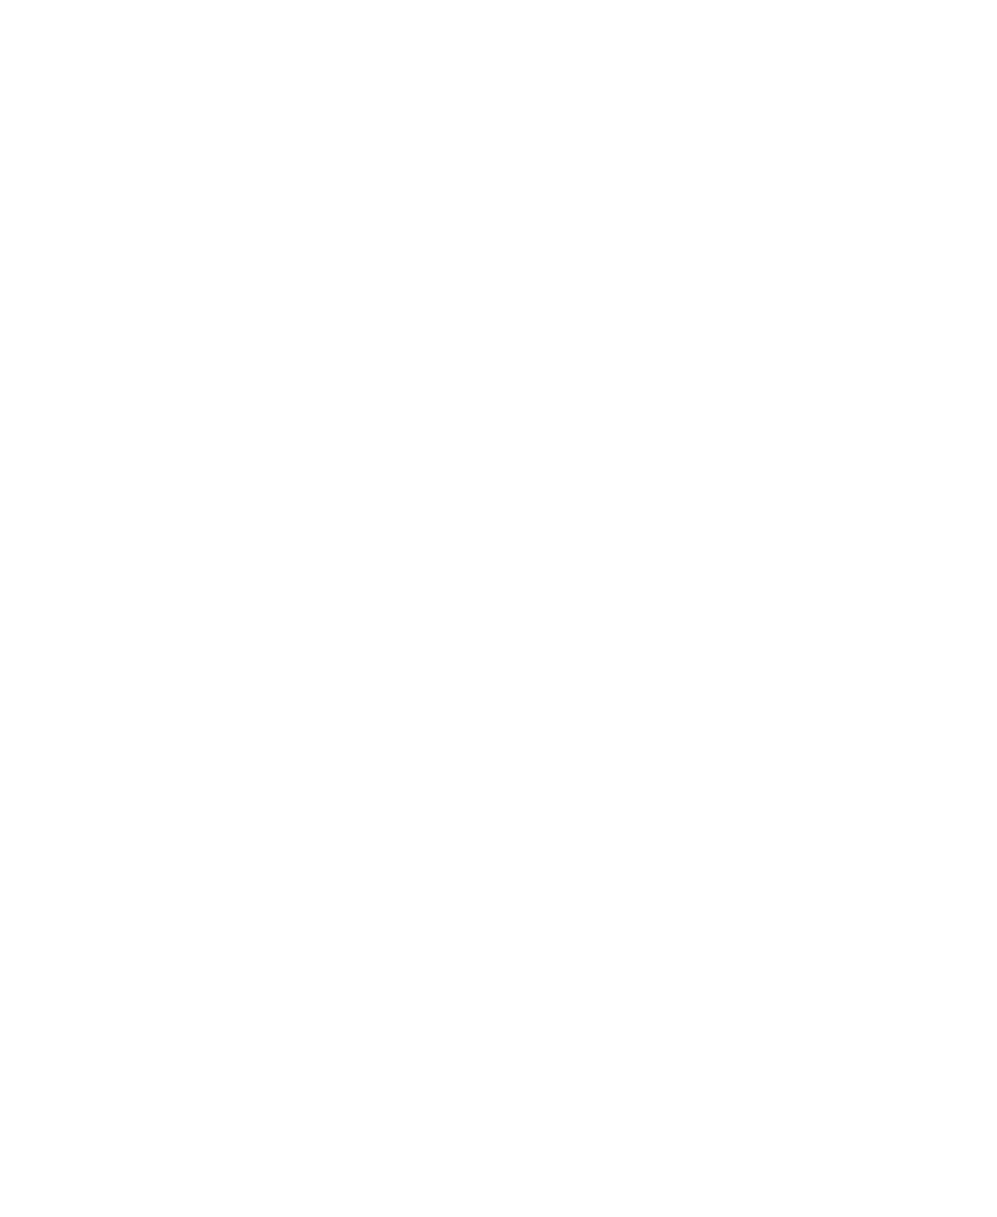 Endpoint team logo